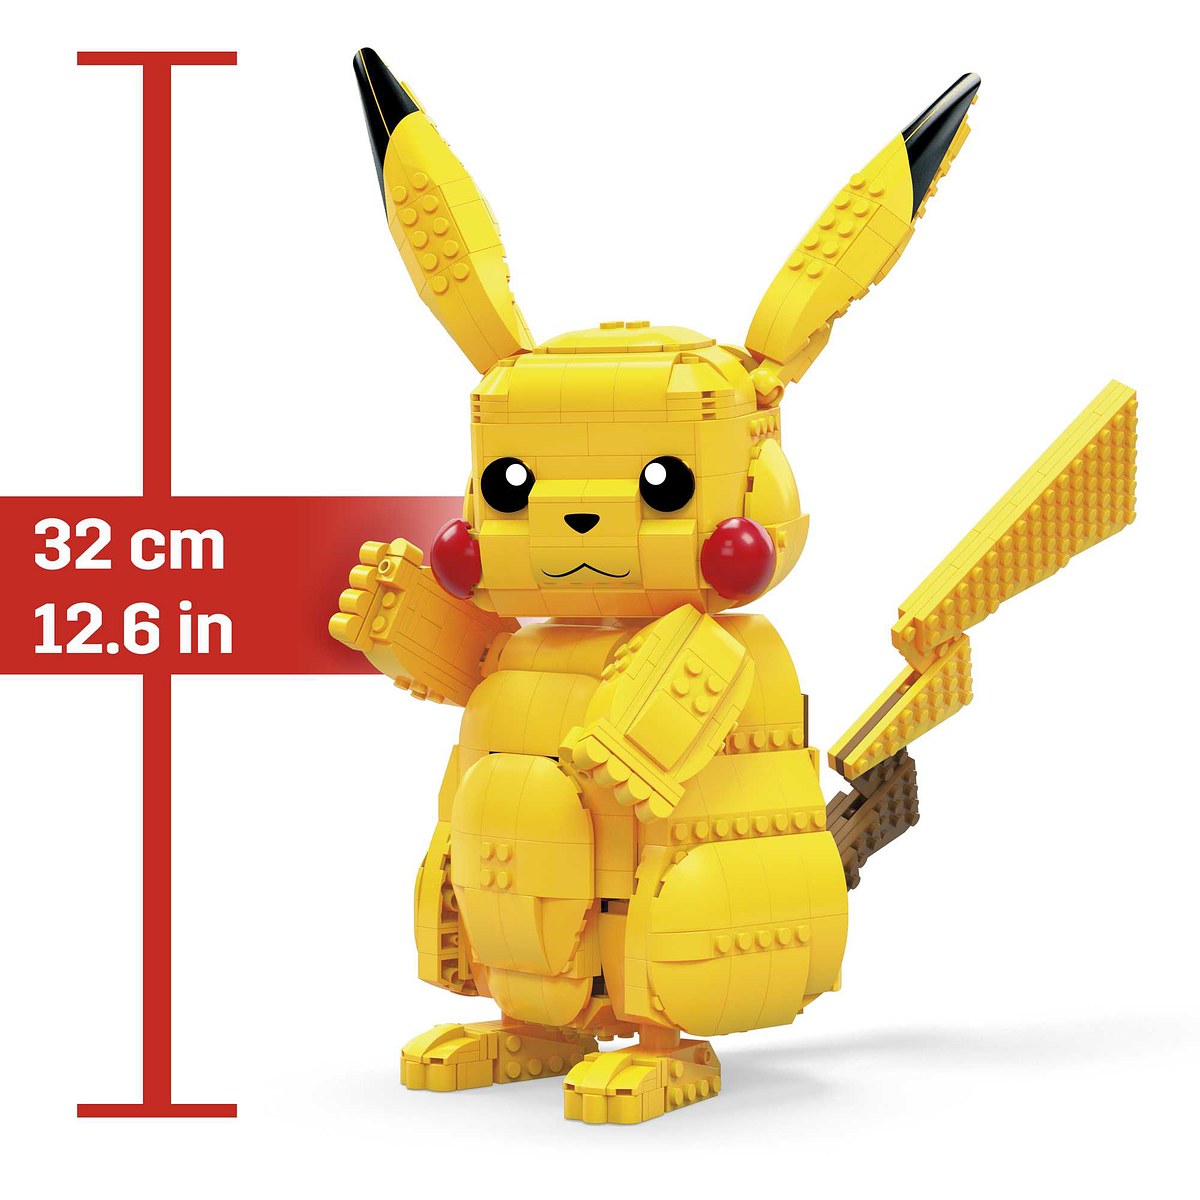 Comprar Mega Construx Pokemon Pikachu de Mega Bloks